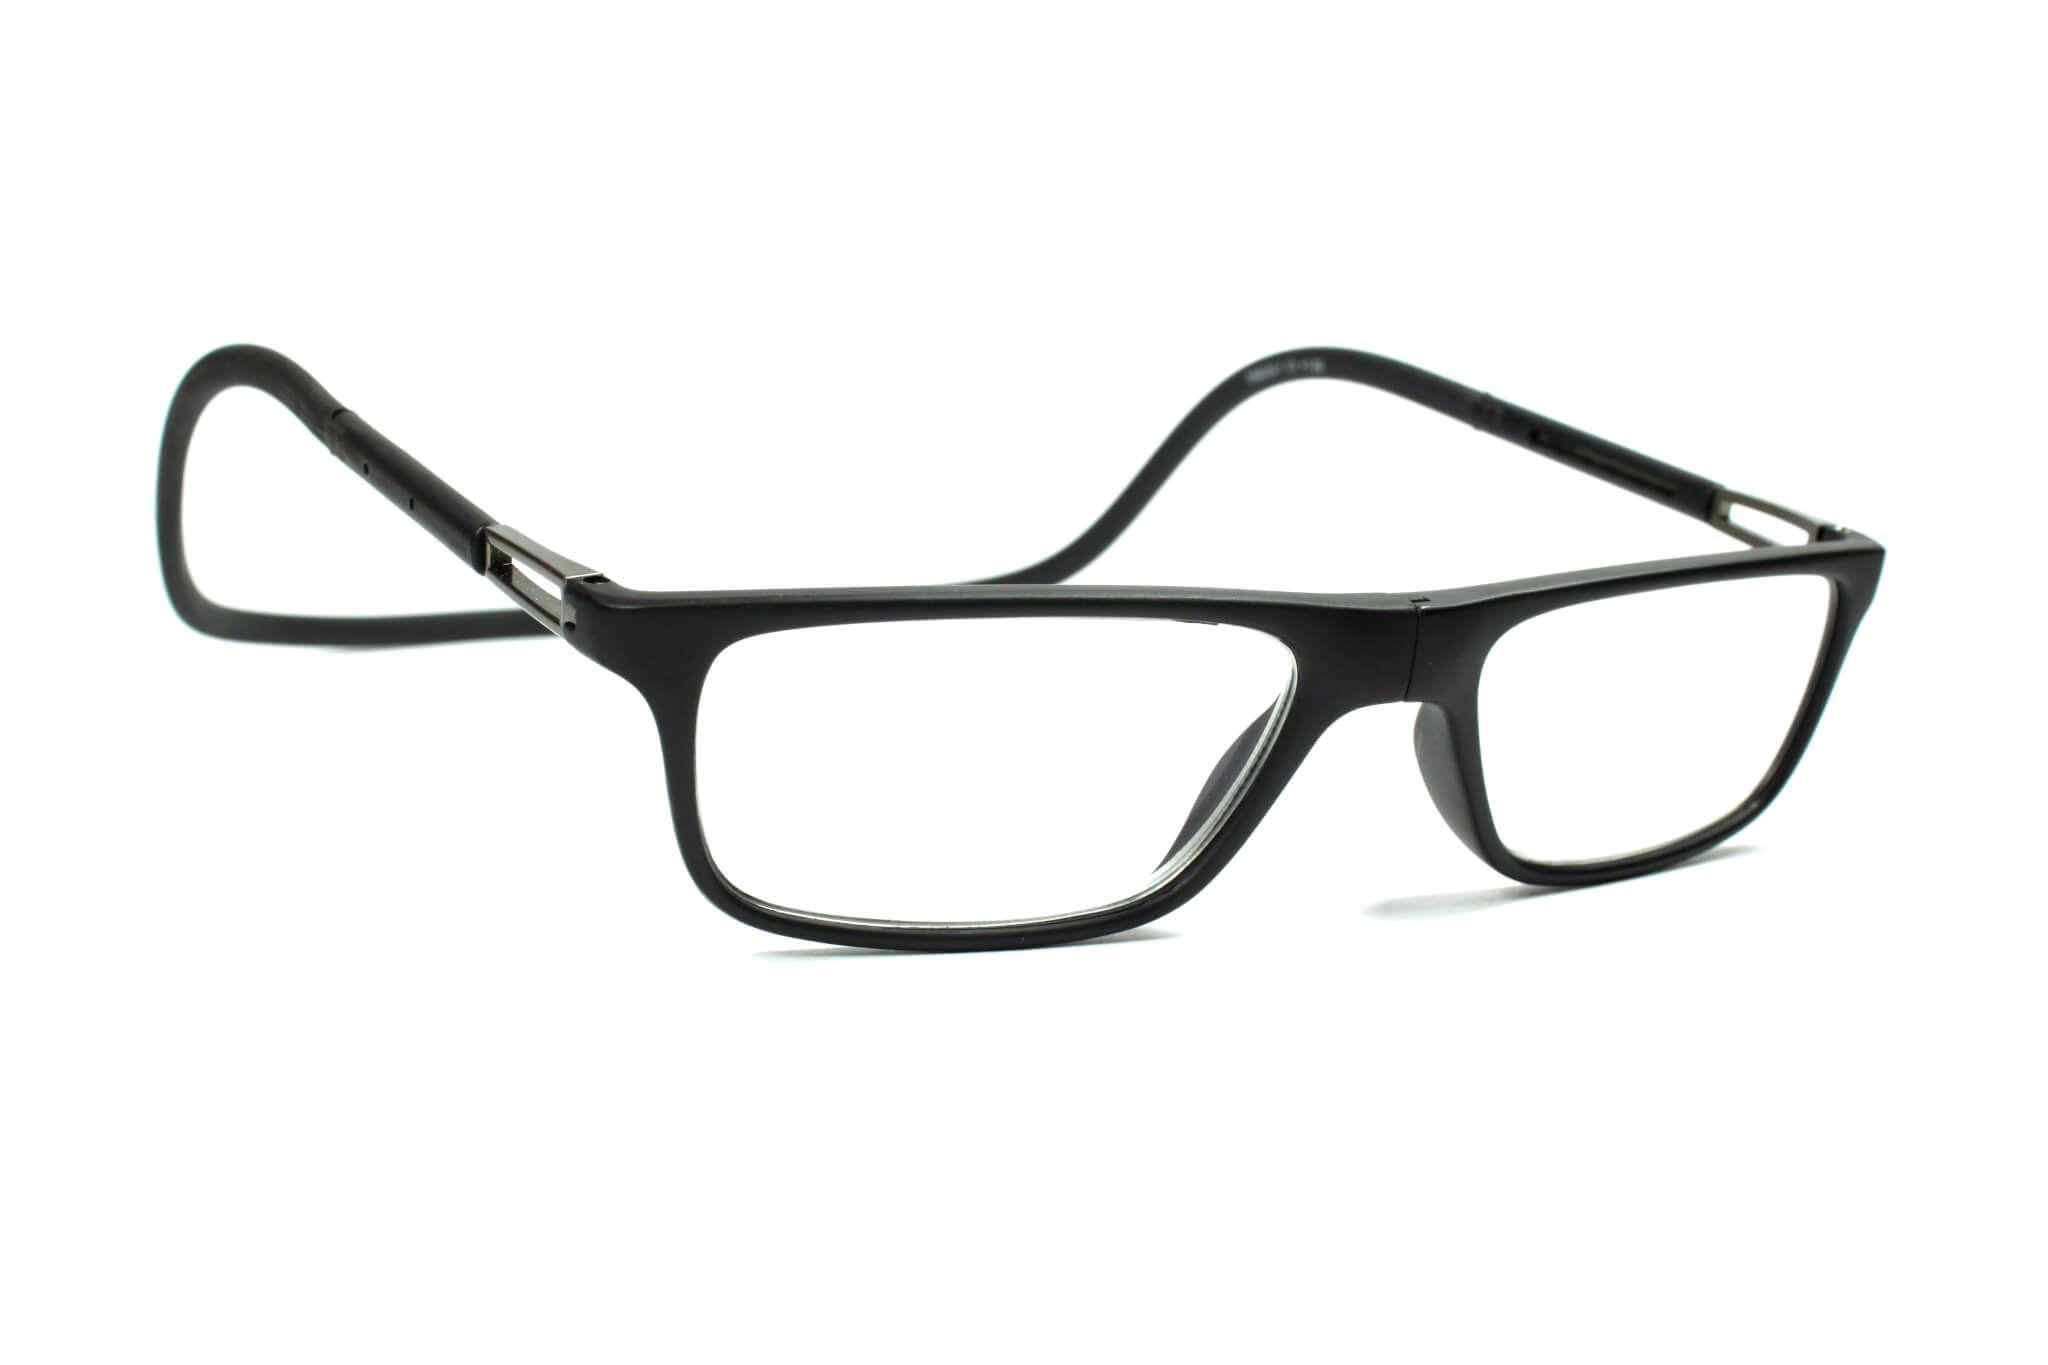 NeckSpec Magnetic Reading glasses available at igear eyewear